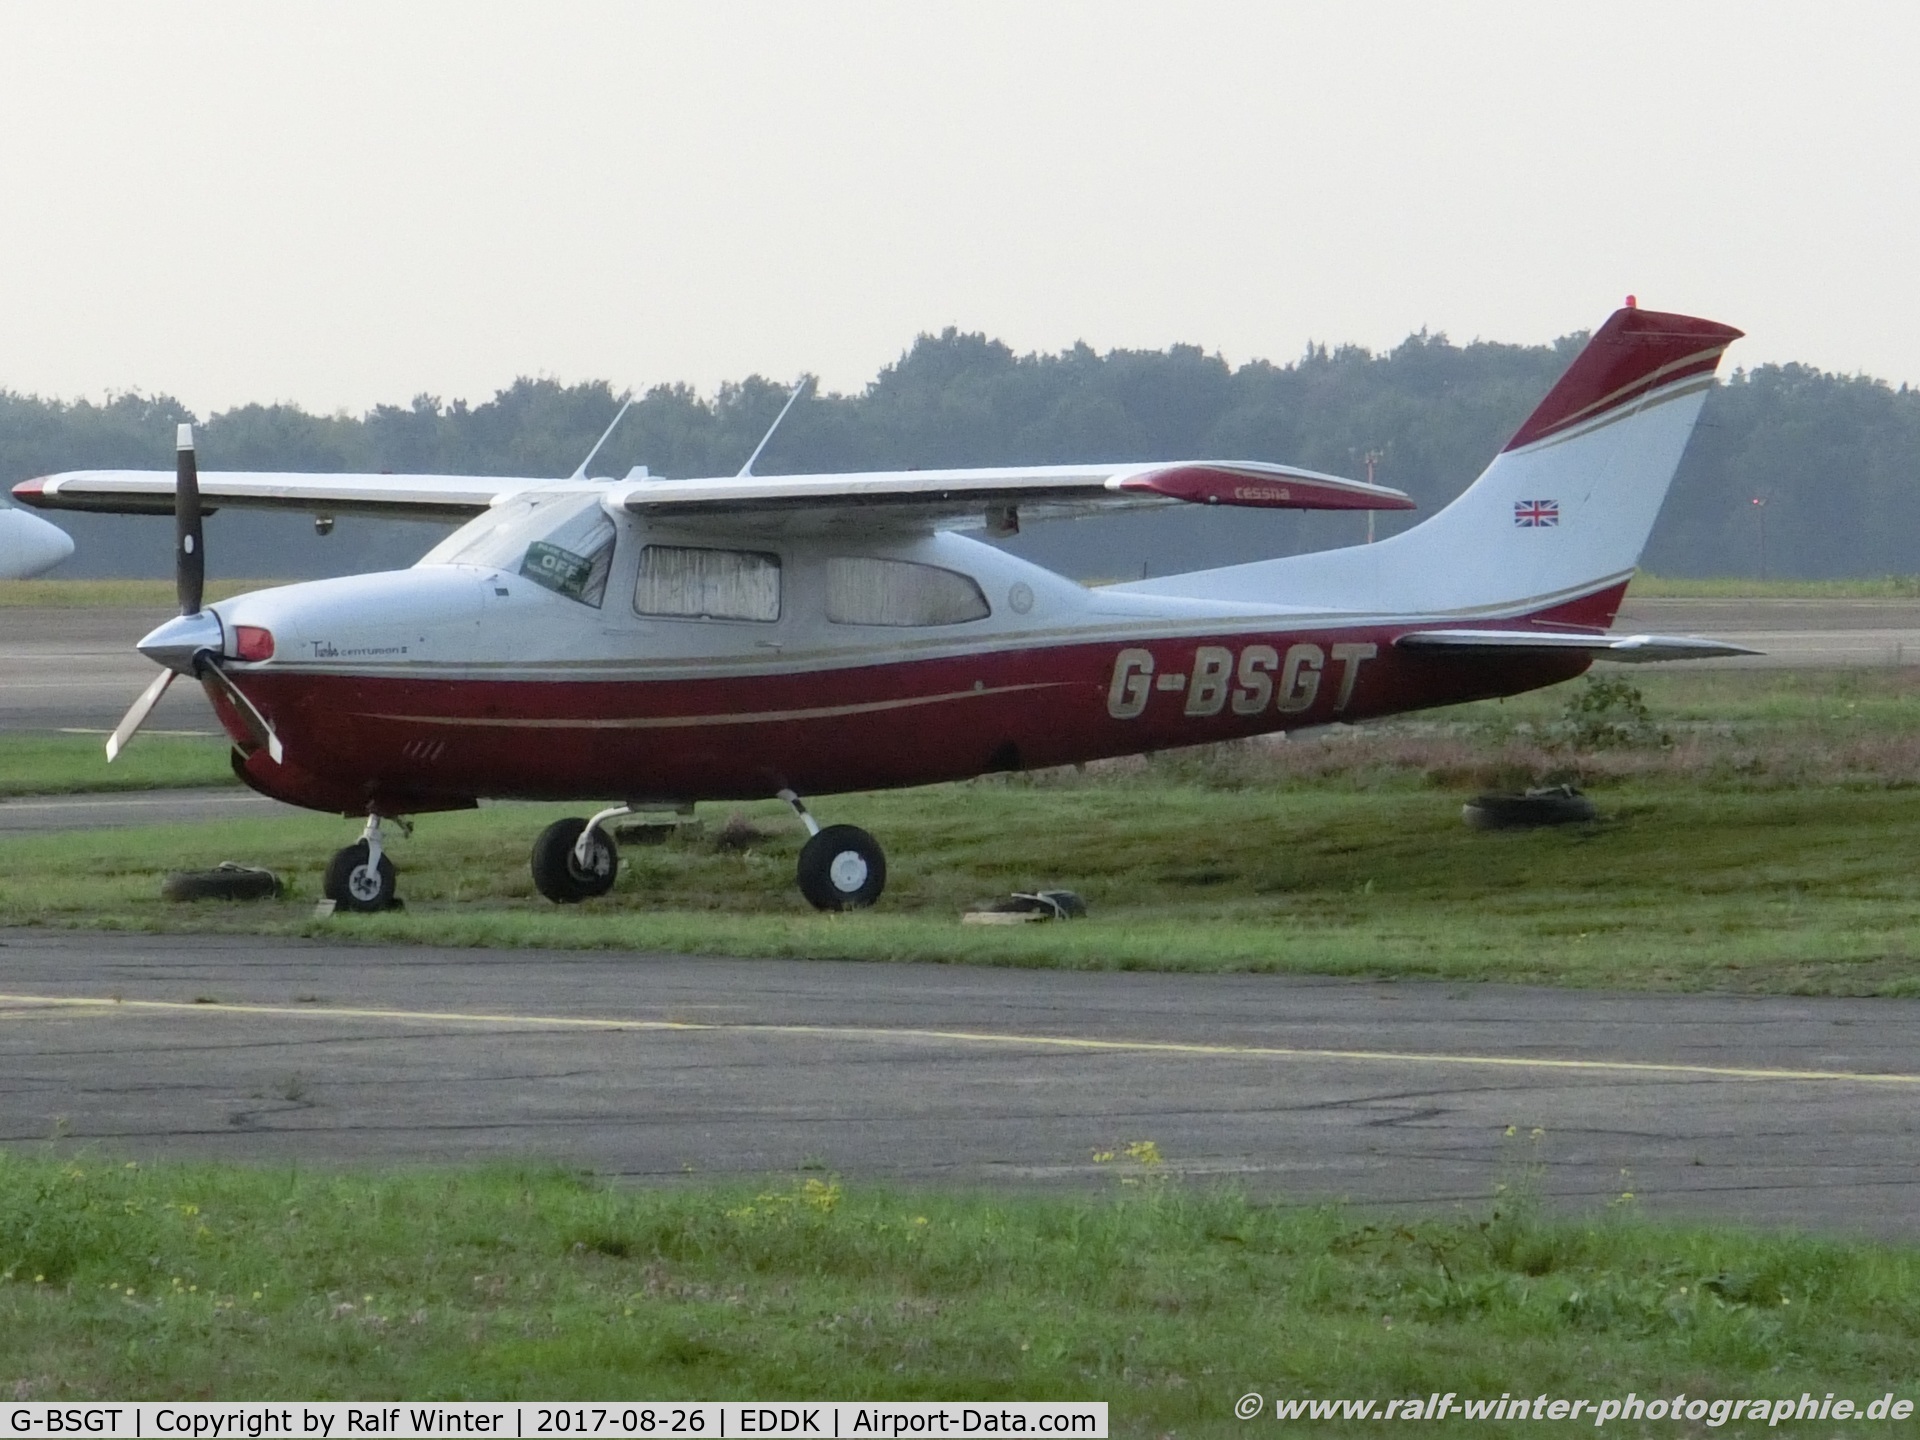 G-BSGT, 1979 Cessna T210N Turbo Centurion C/N 210-63361, Cessna T210N Turbo Centurion - Private - 21063361 - G-BSGT - 26.08.2017 - CGN